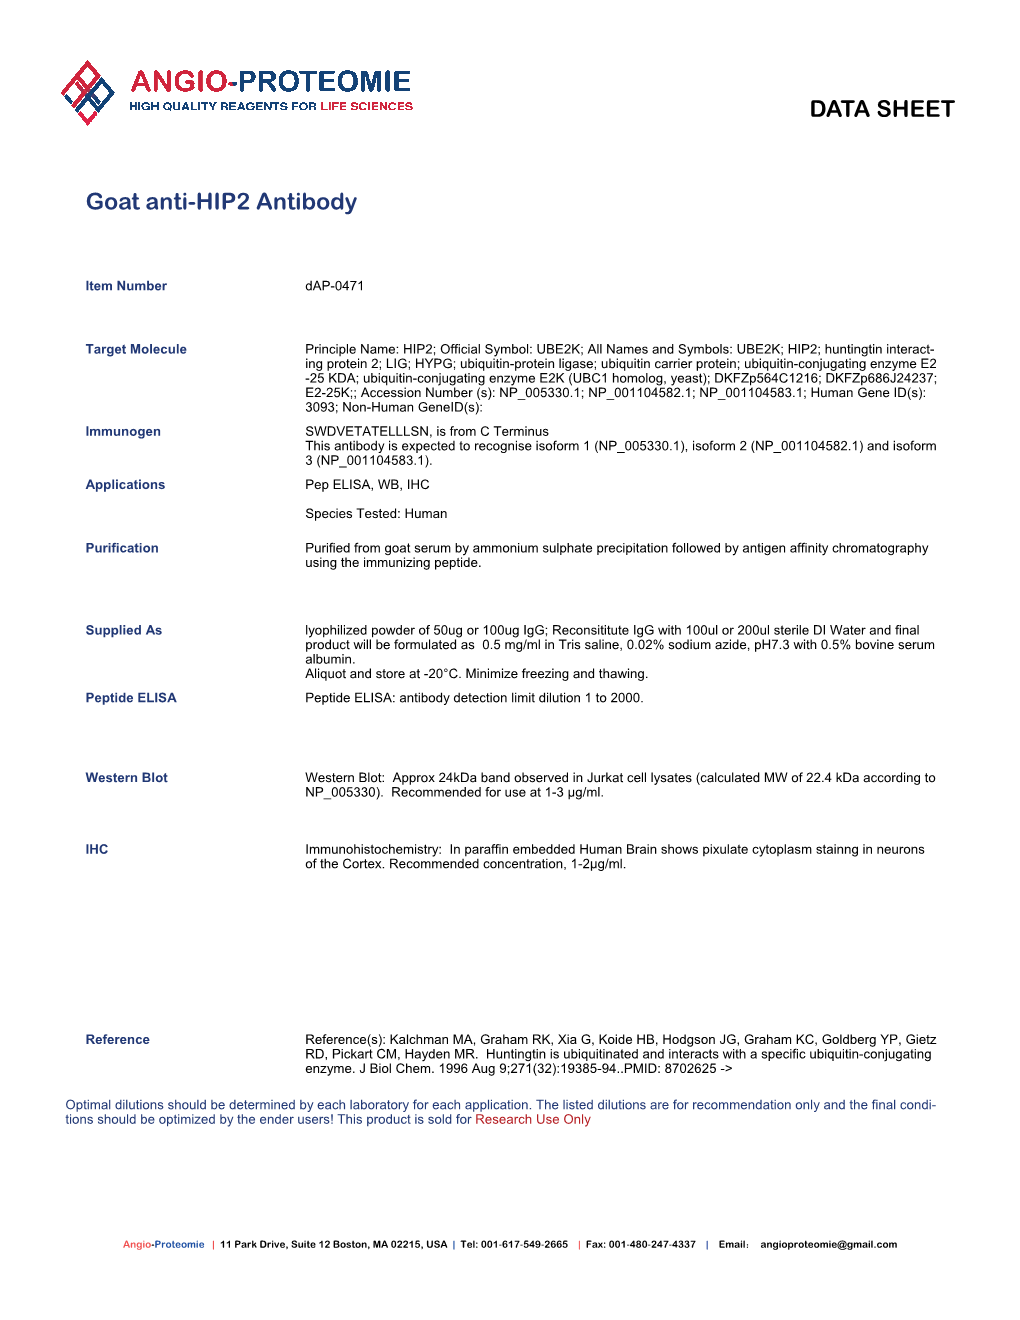 Dap-0471 Goat Anti-HIP2 Antibody-PDF.Pdf